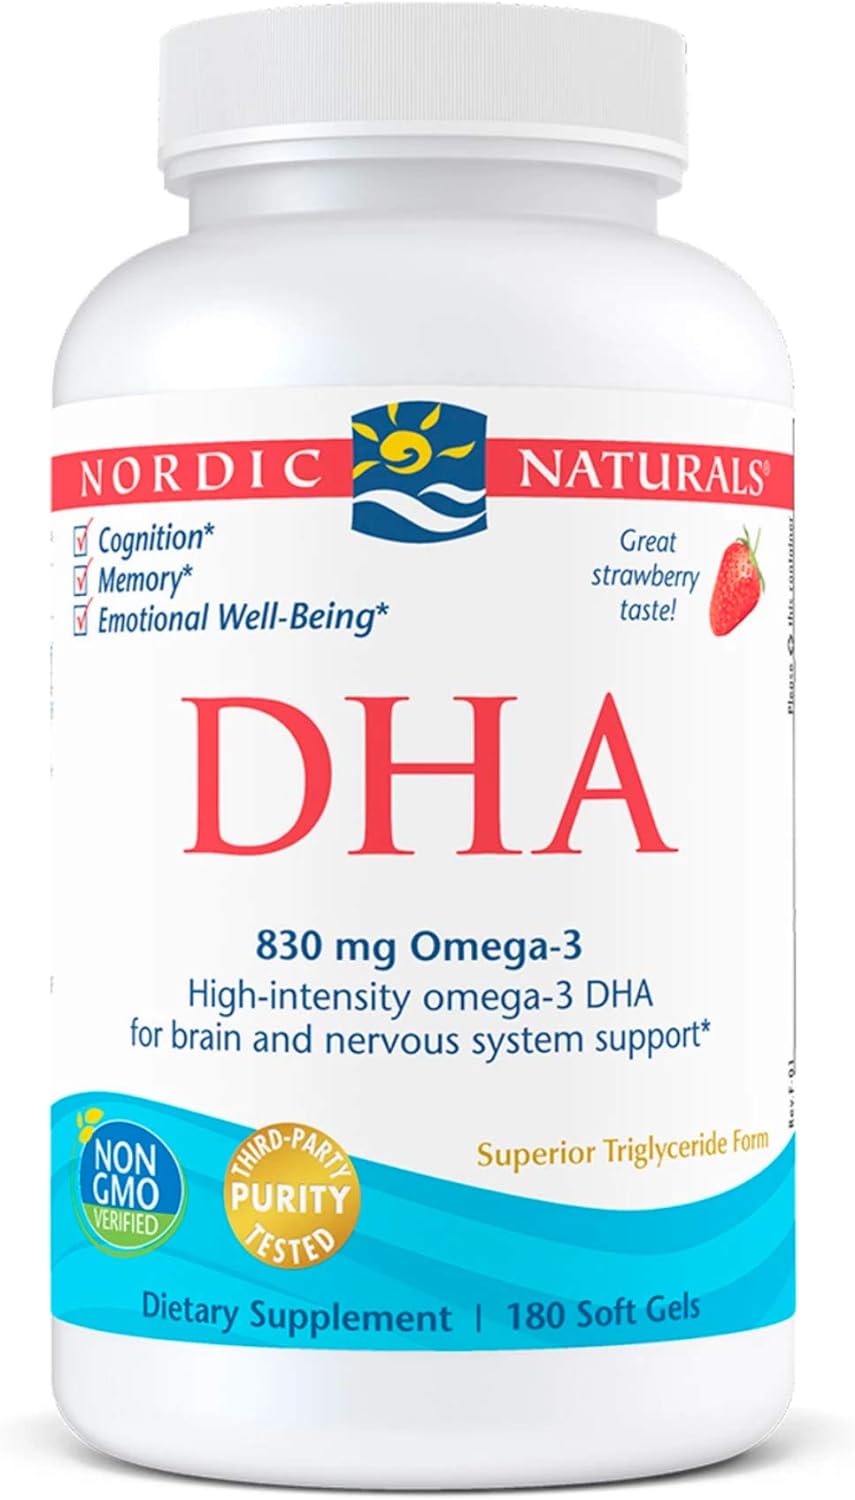 Nordic Naturals DHA, Strawberry - 180 Soft Gels - 830 mg Omega-3 - Hig